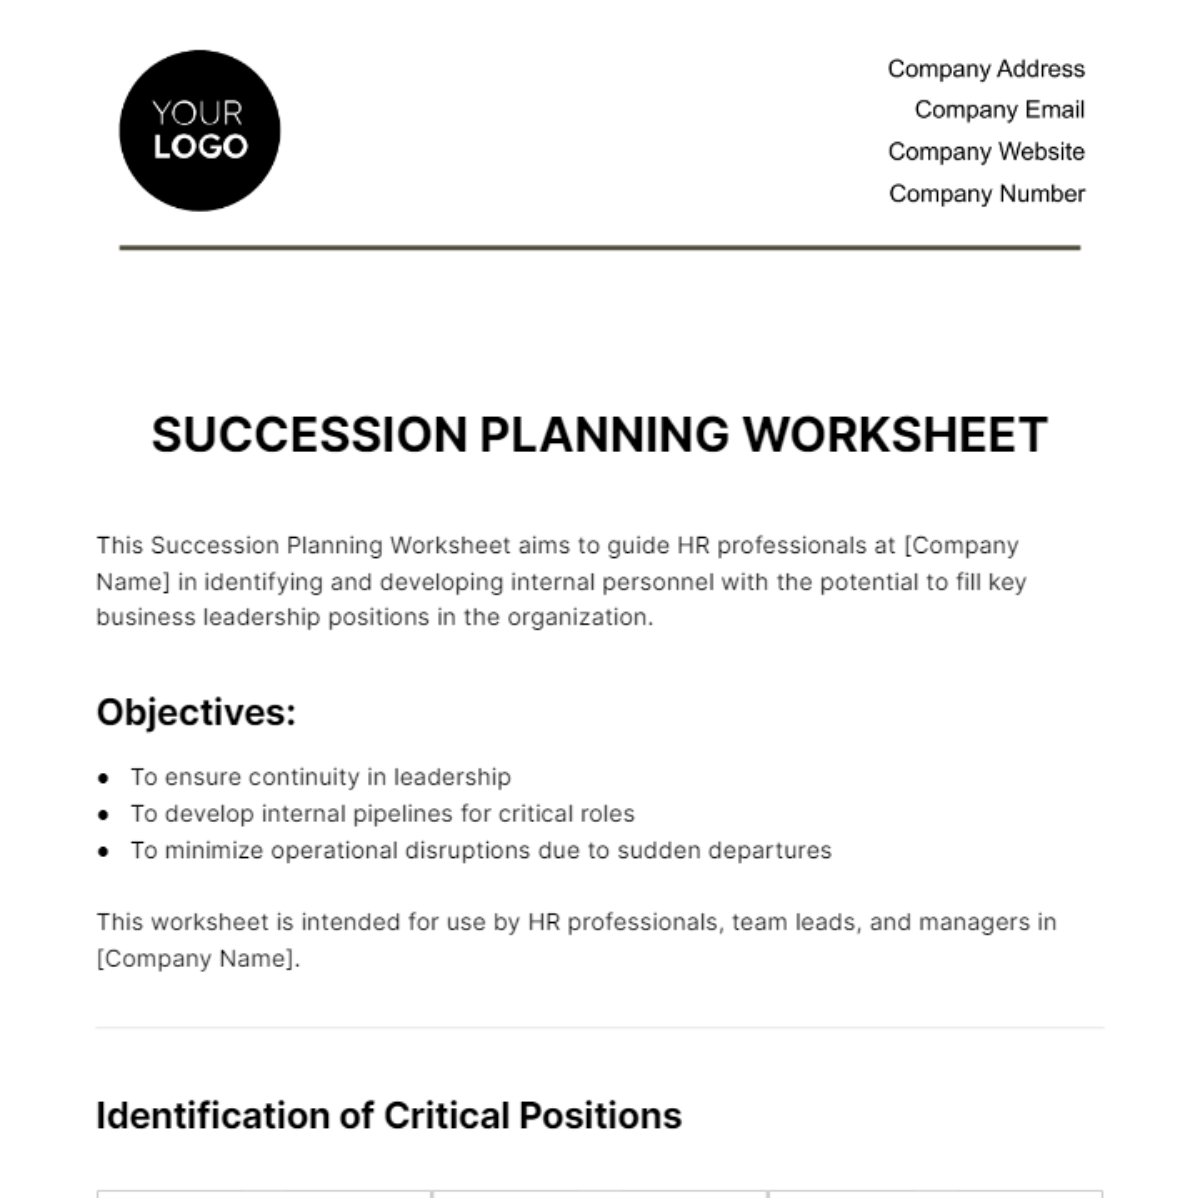 Succession Planning Worksheet HR Template